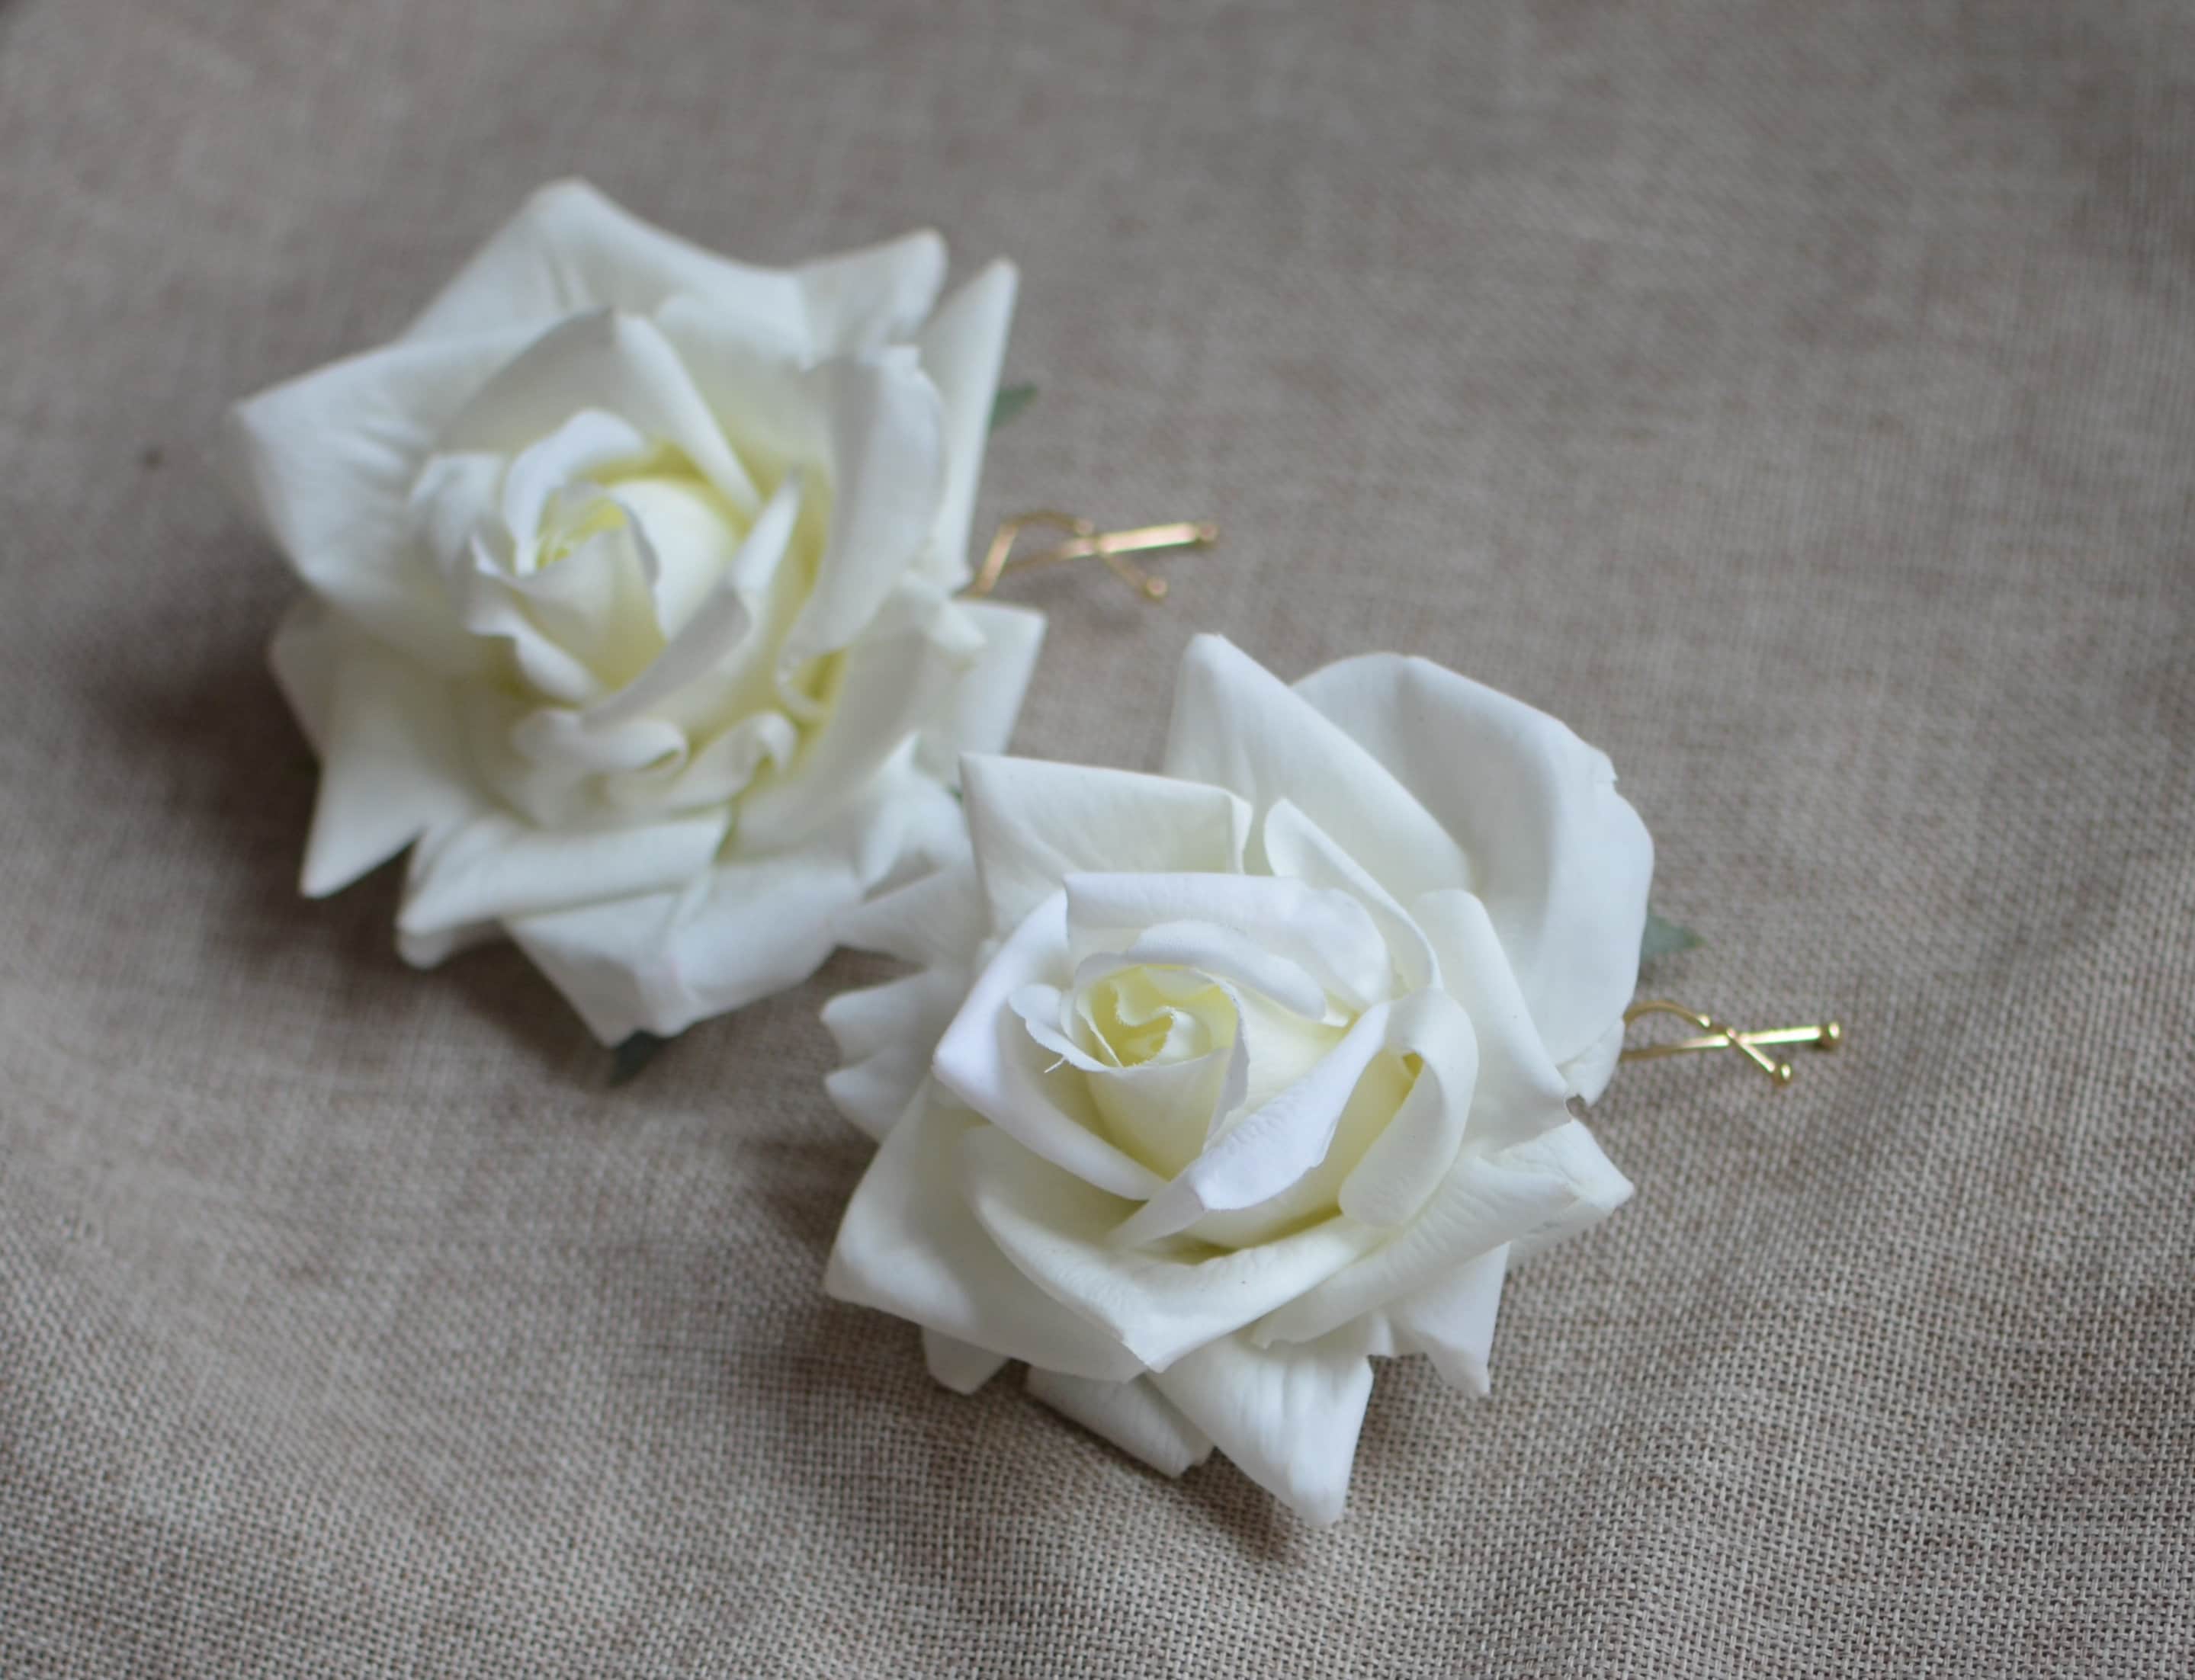 120pcs White Rose Flower Bridal Wedding Hair Twists Spins Pins Hair Accessory 